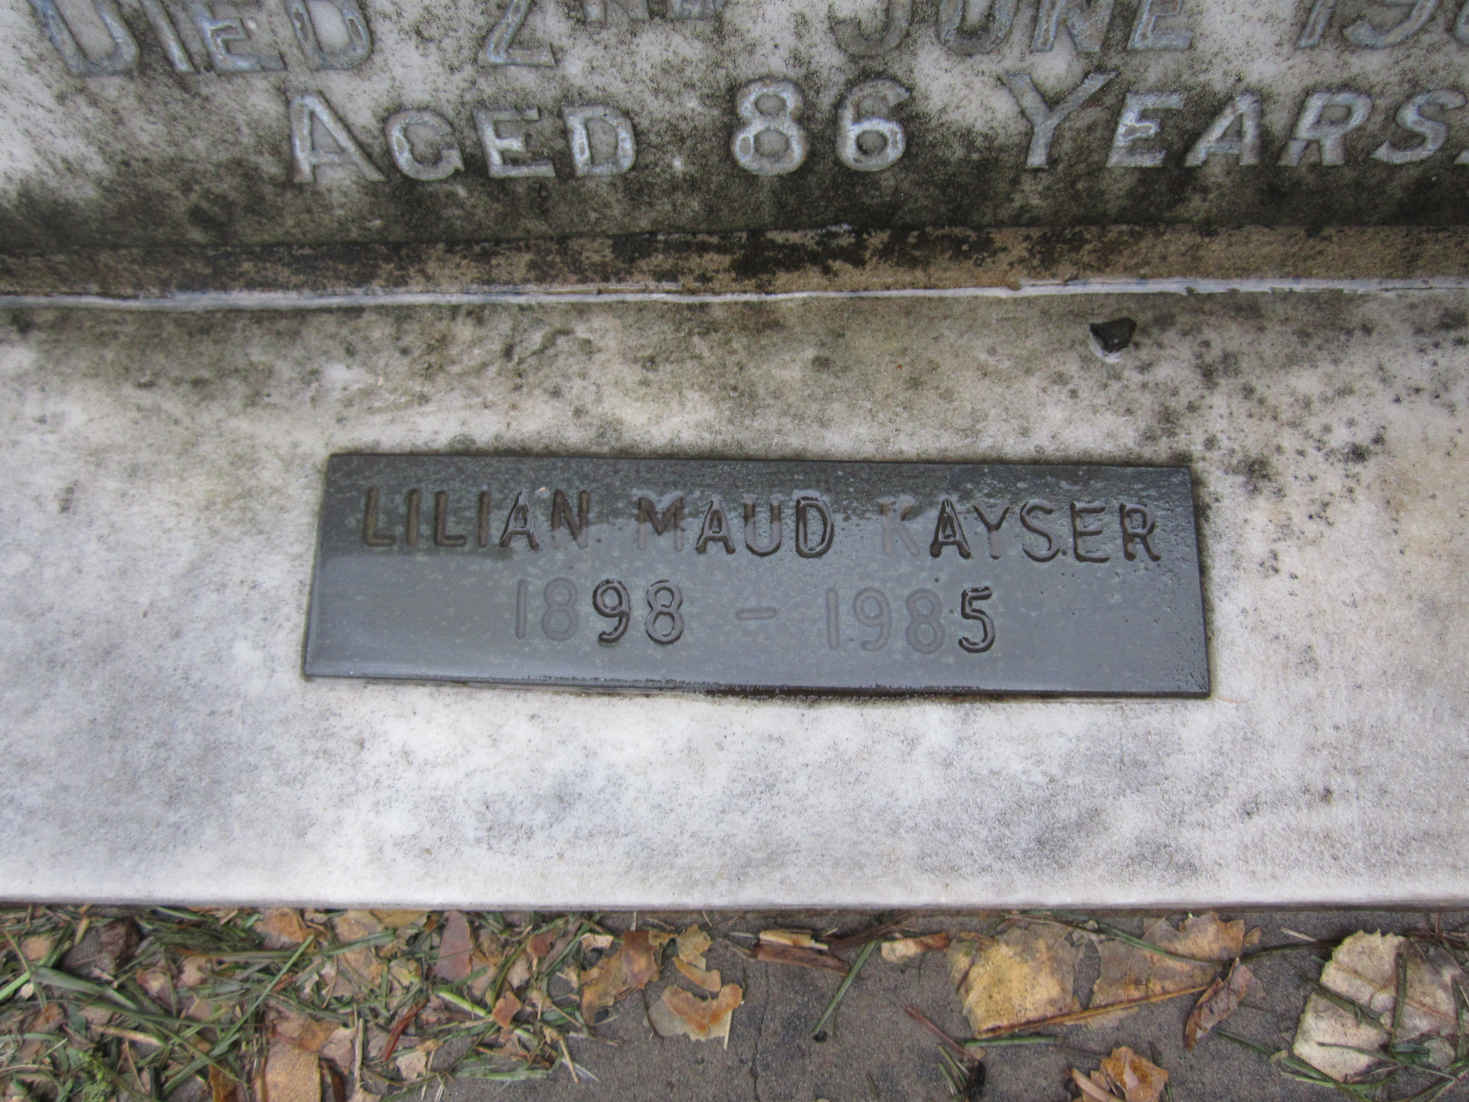 KAYSER Lilian Maud 1898-1985